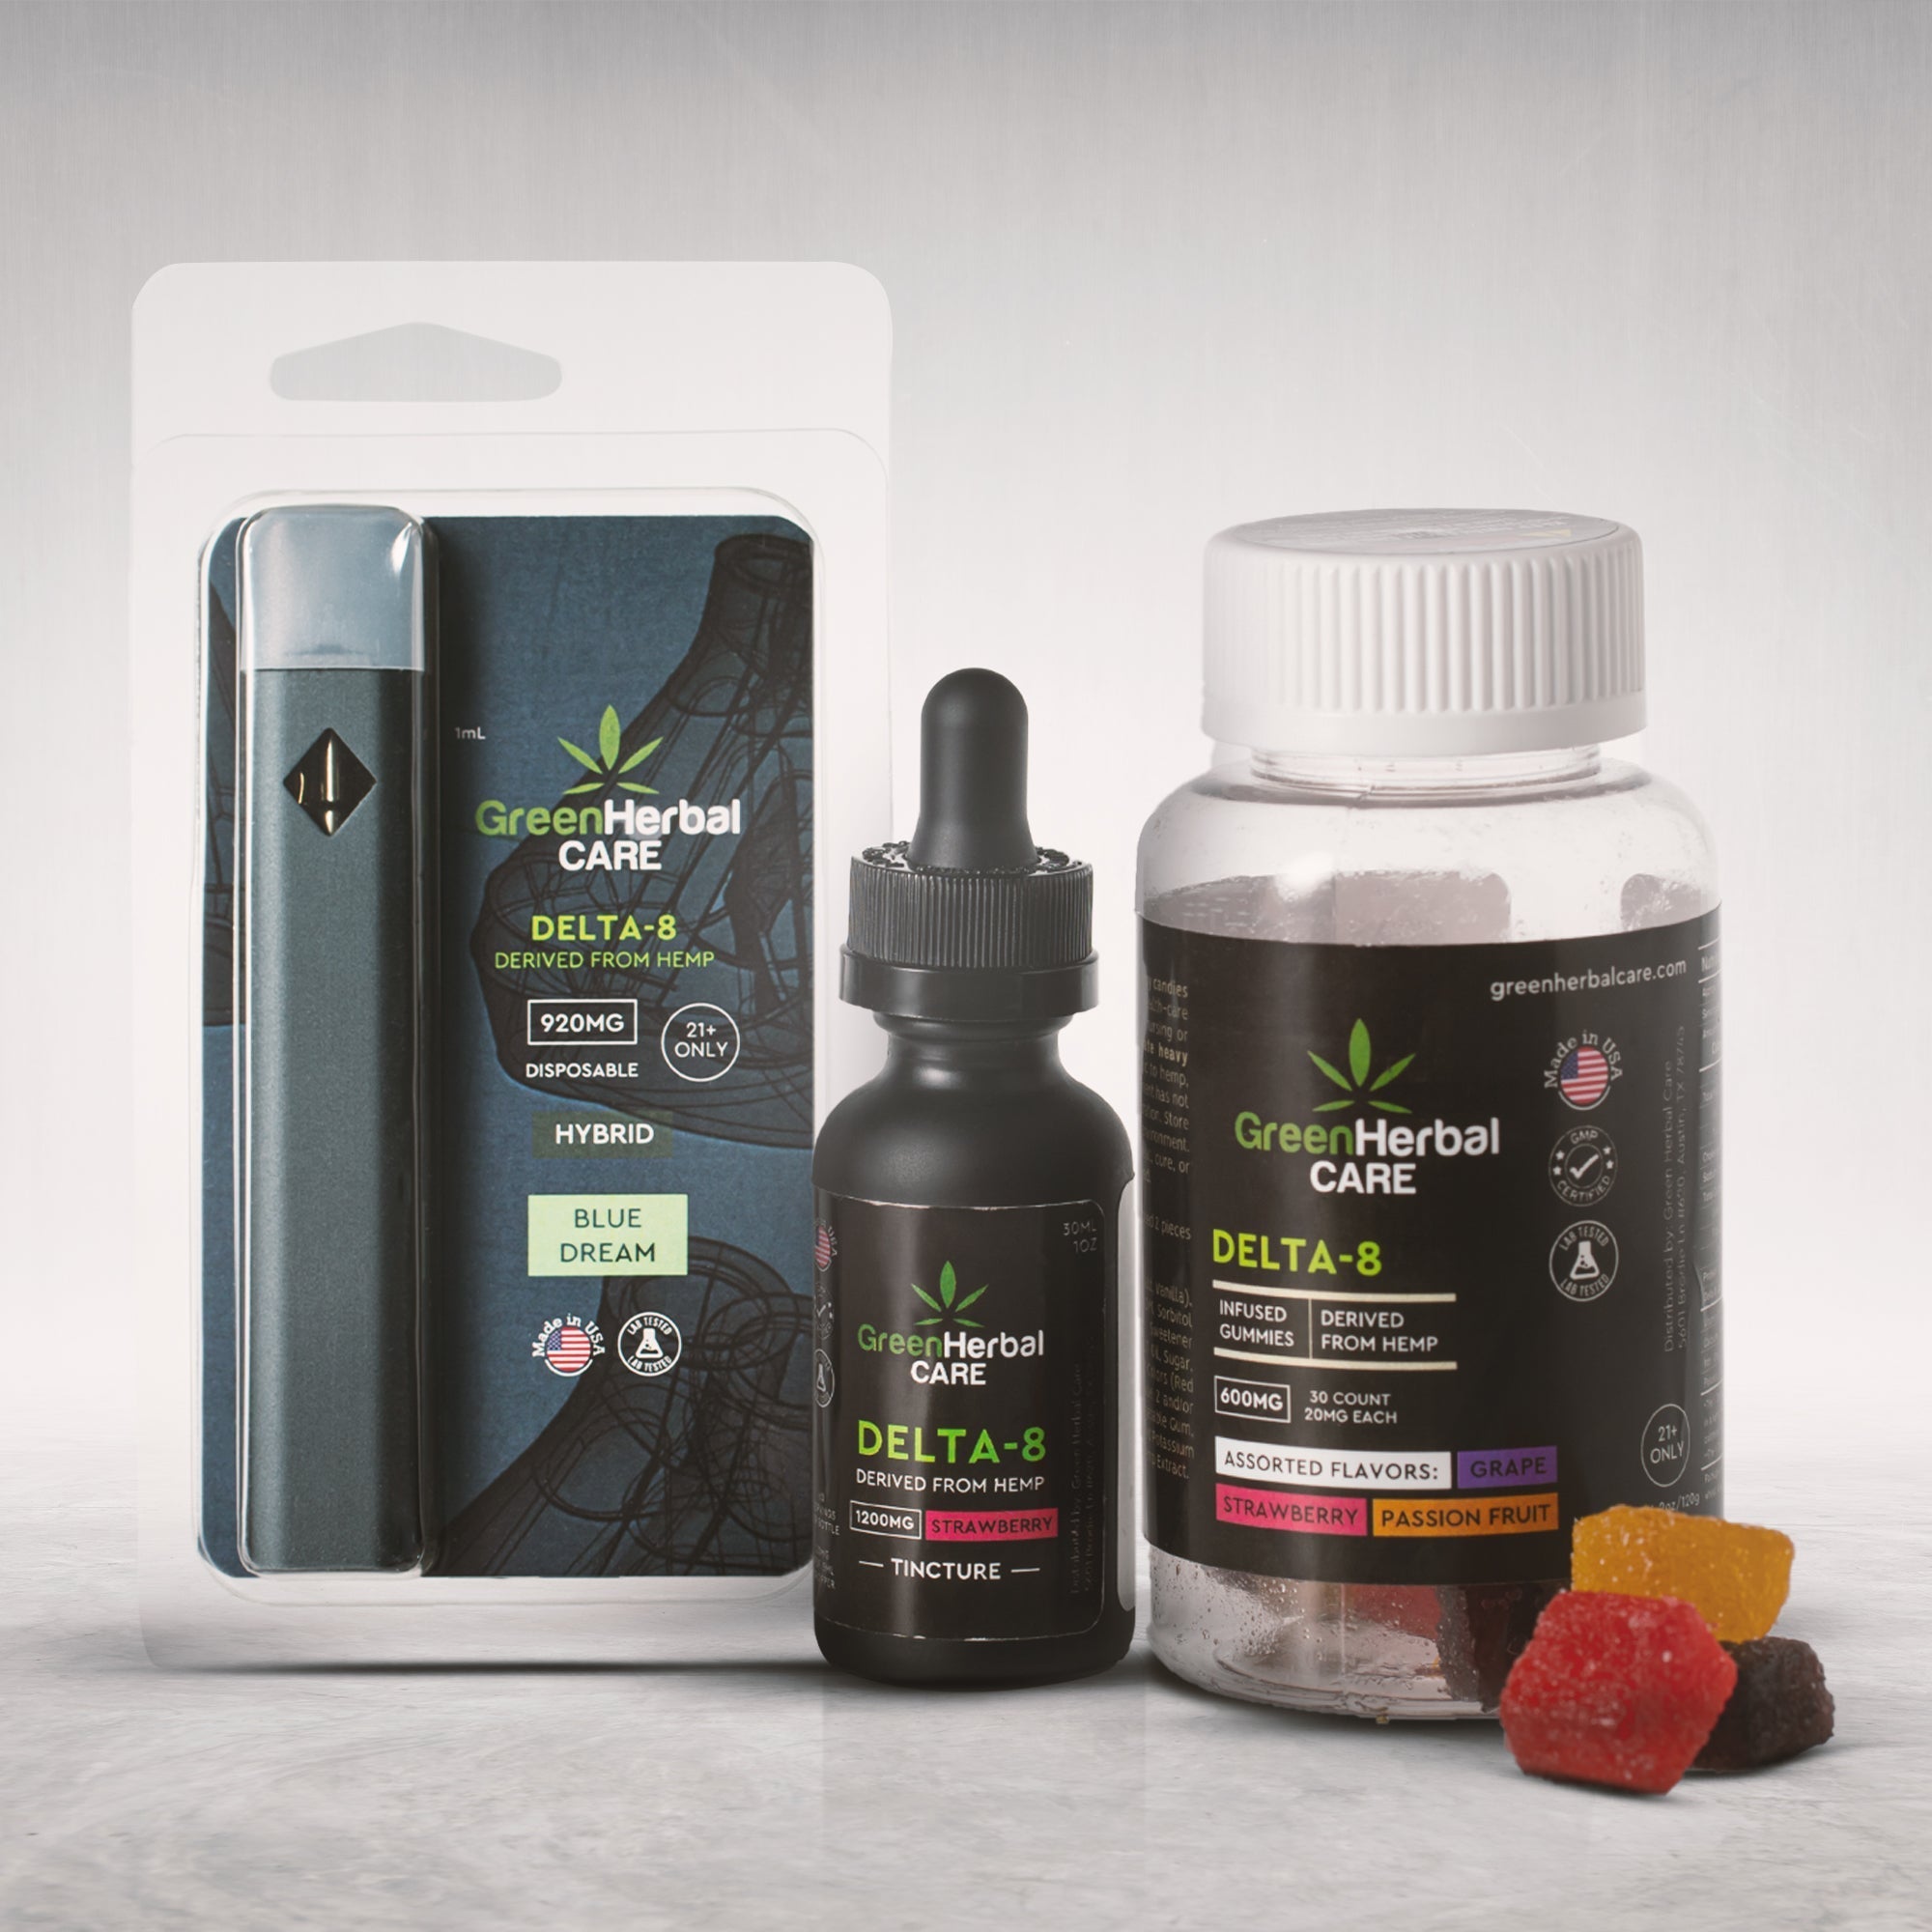 Green Herbal Care Delta 8 Experienced Bundles Gummies Oils Disposable Best Price